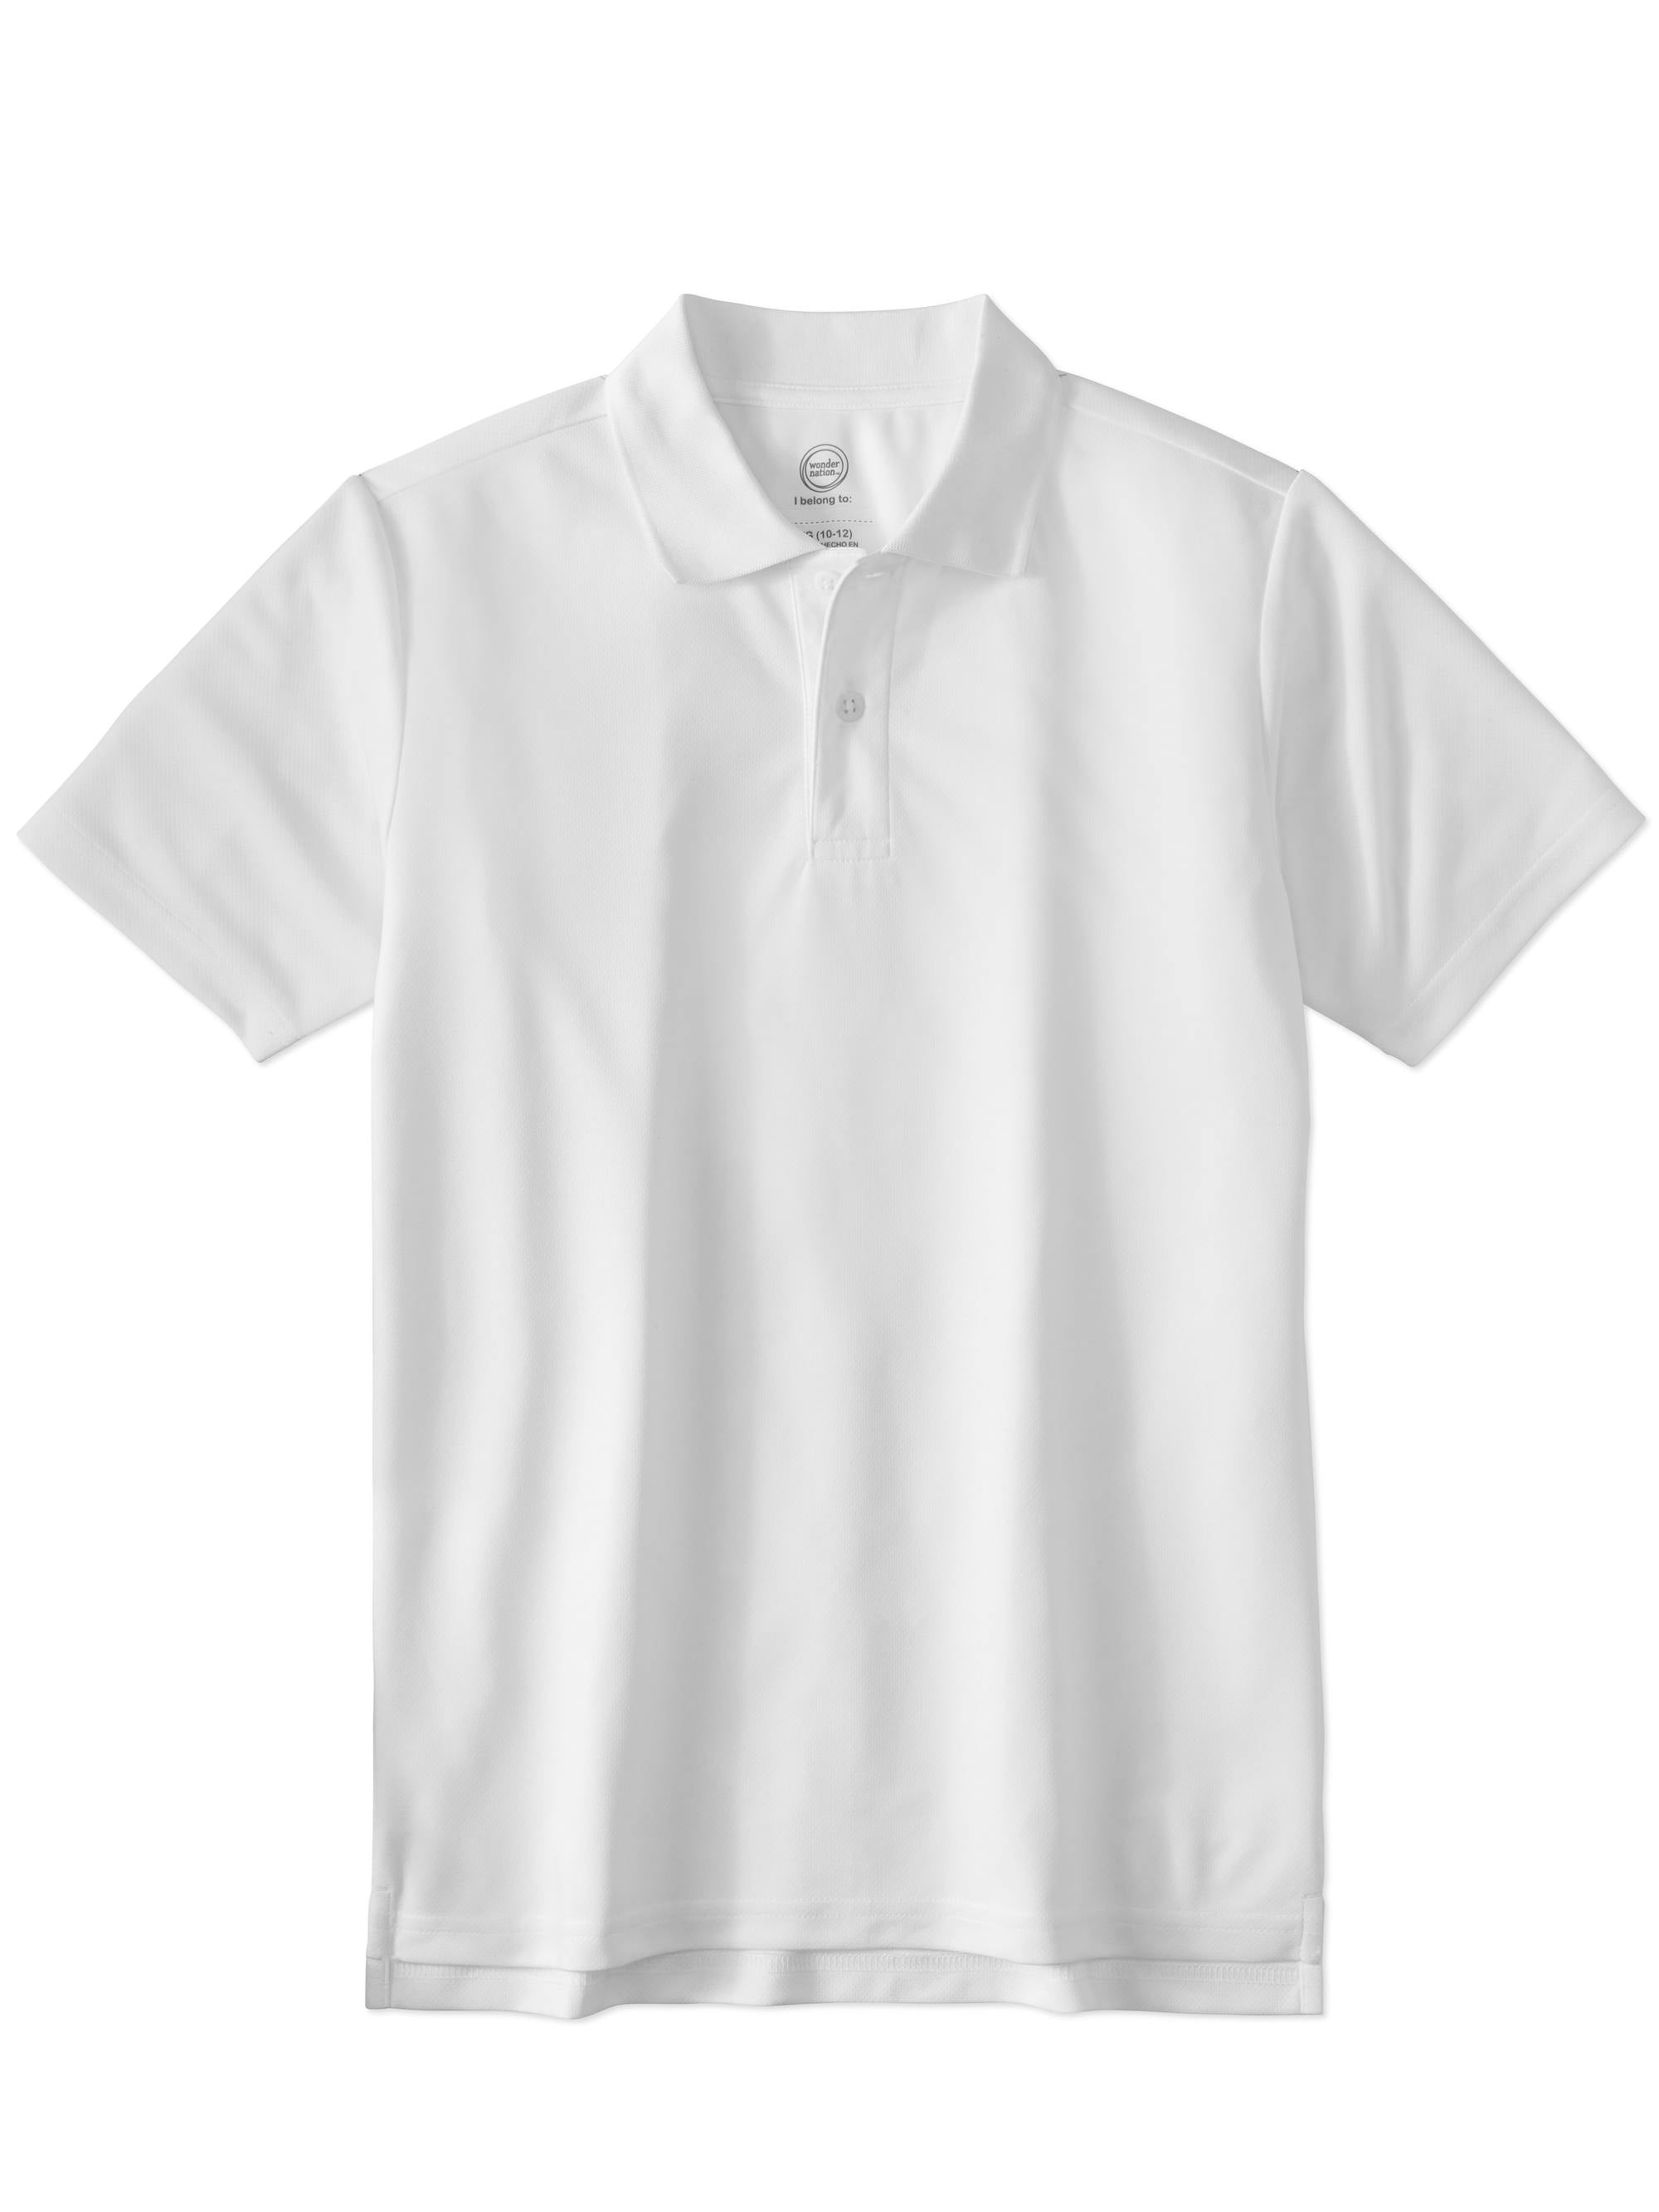 Parker Youth Boys School Uniform Short Sleeve Polo Shirt White Size XS #6876 